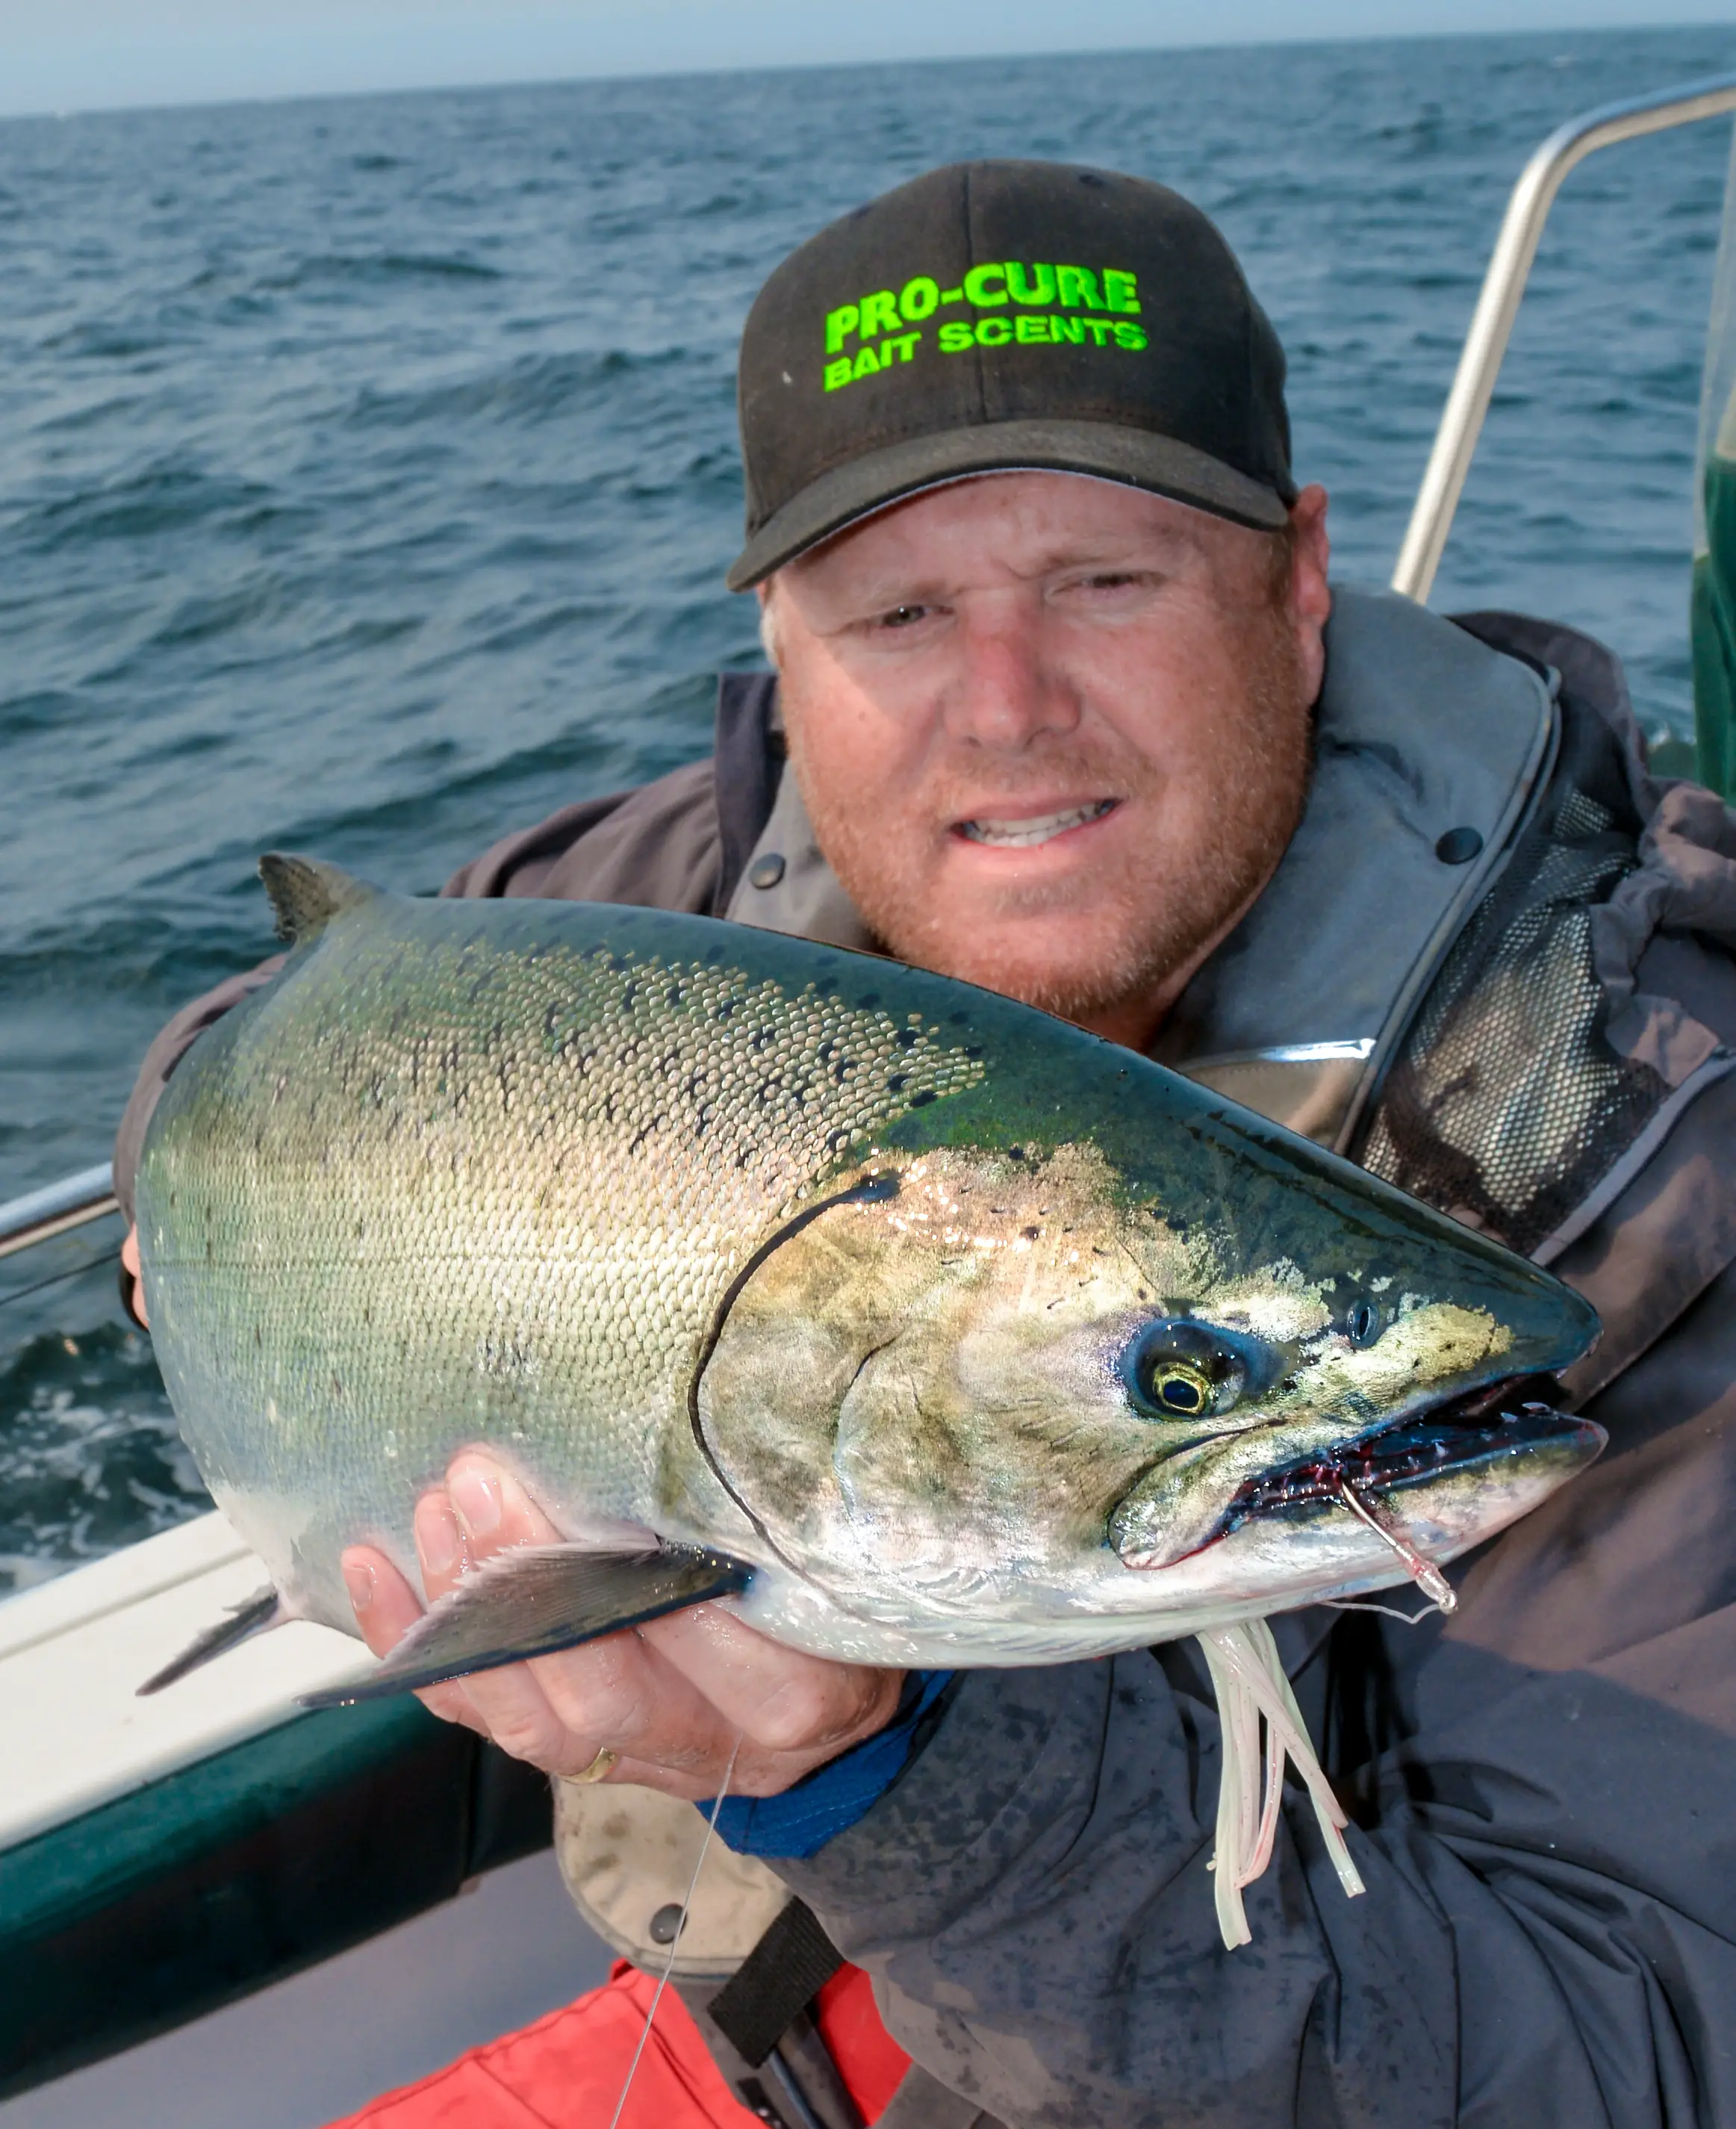 Trolling Reels For Salmon - Go Salmon Fishing